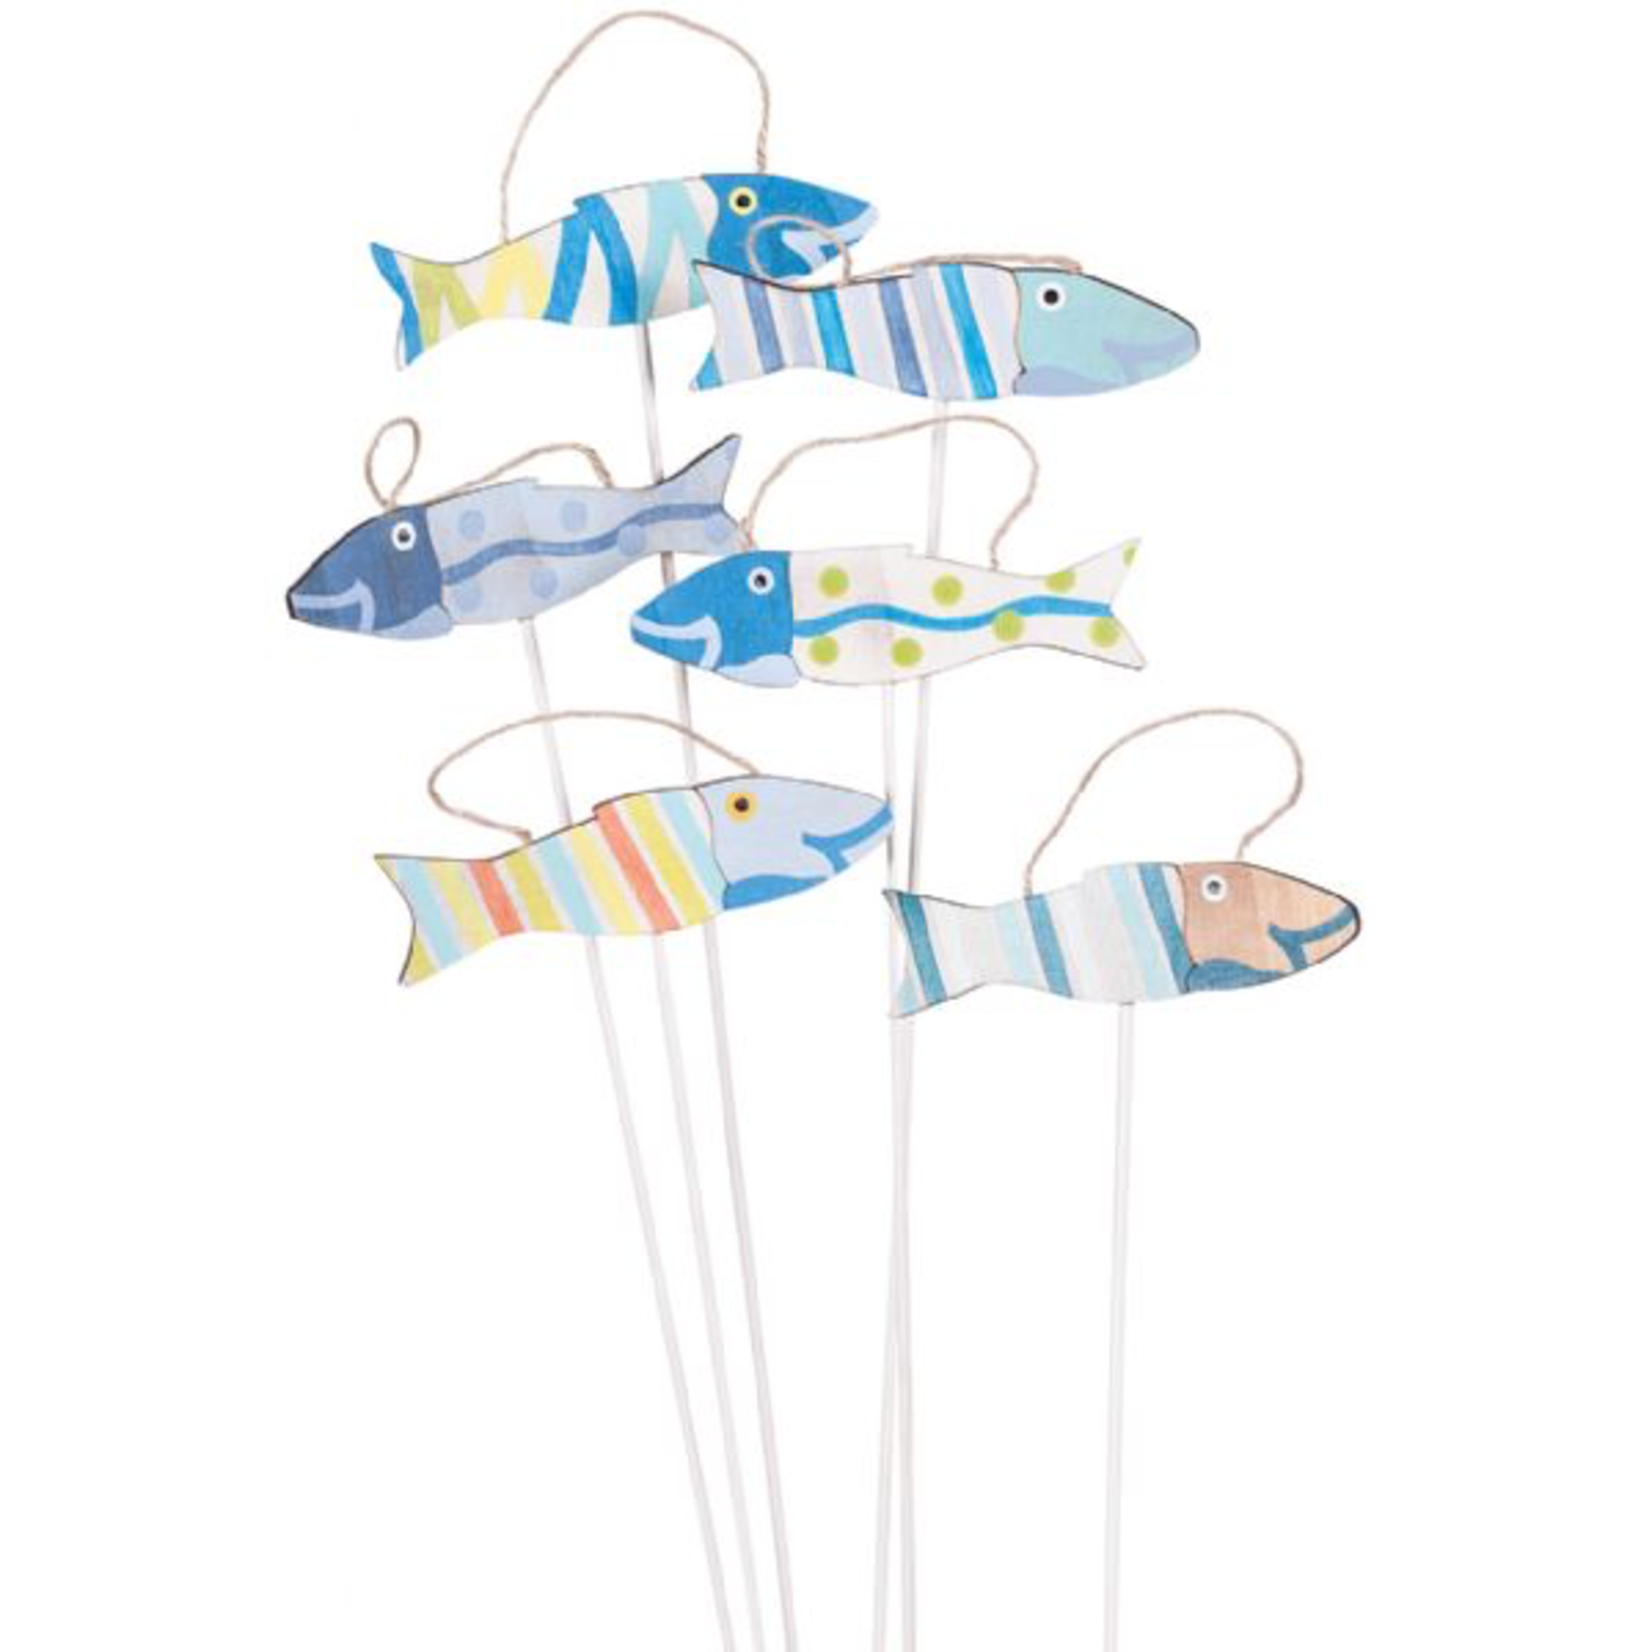 6.25’’ WD FISH PICK- 6 STYLES